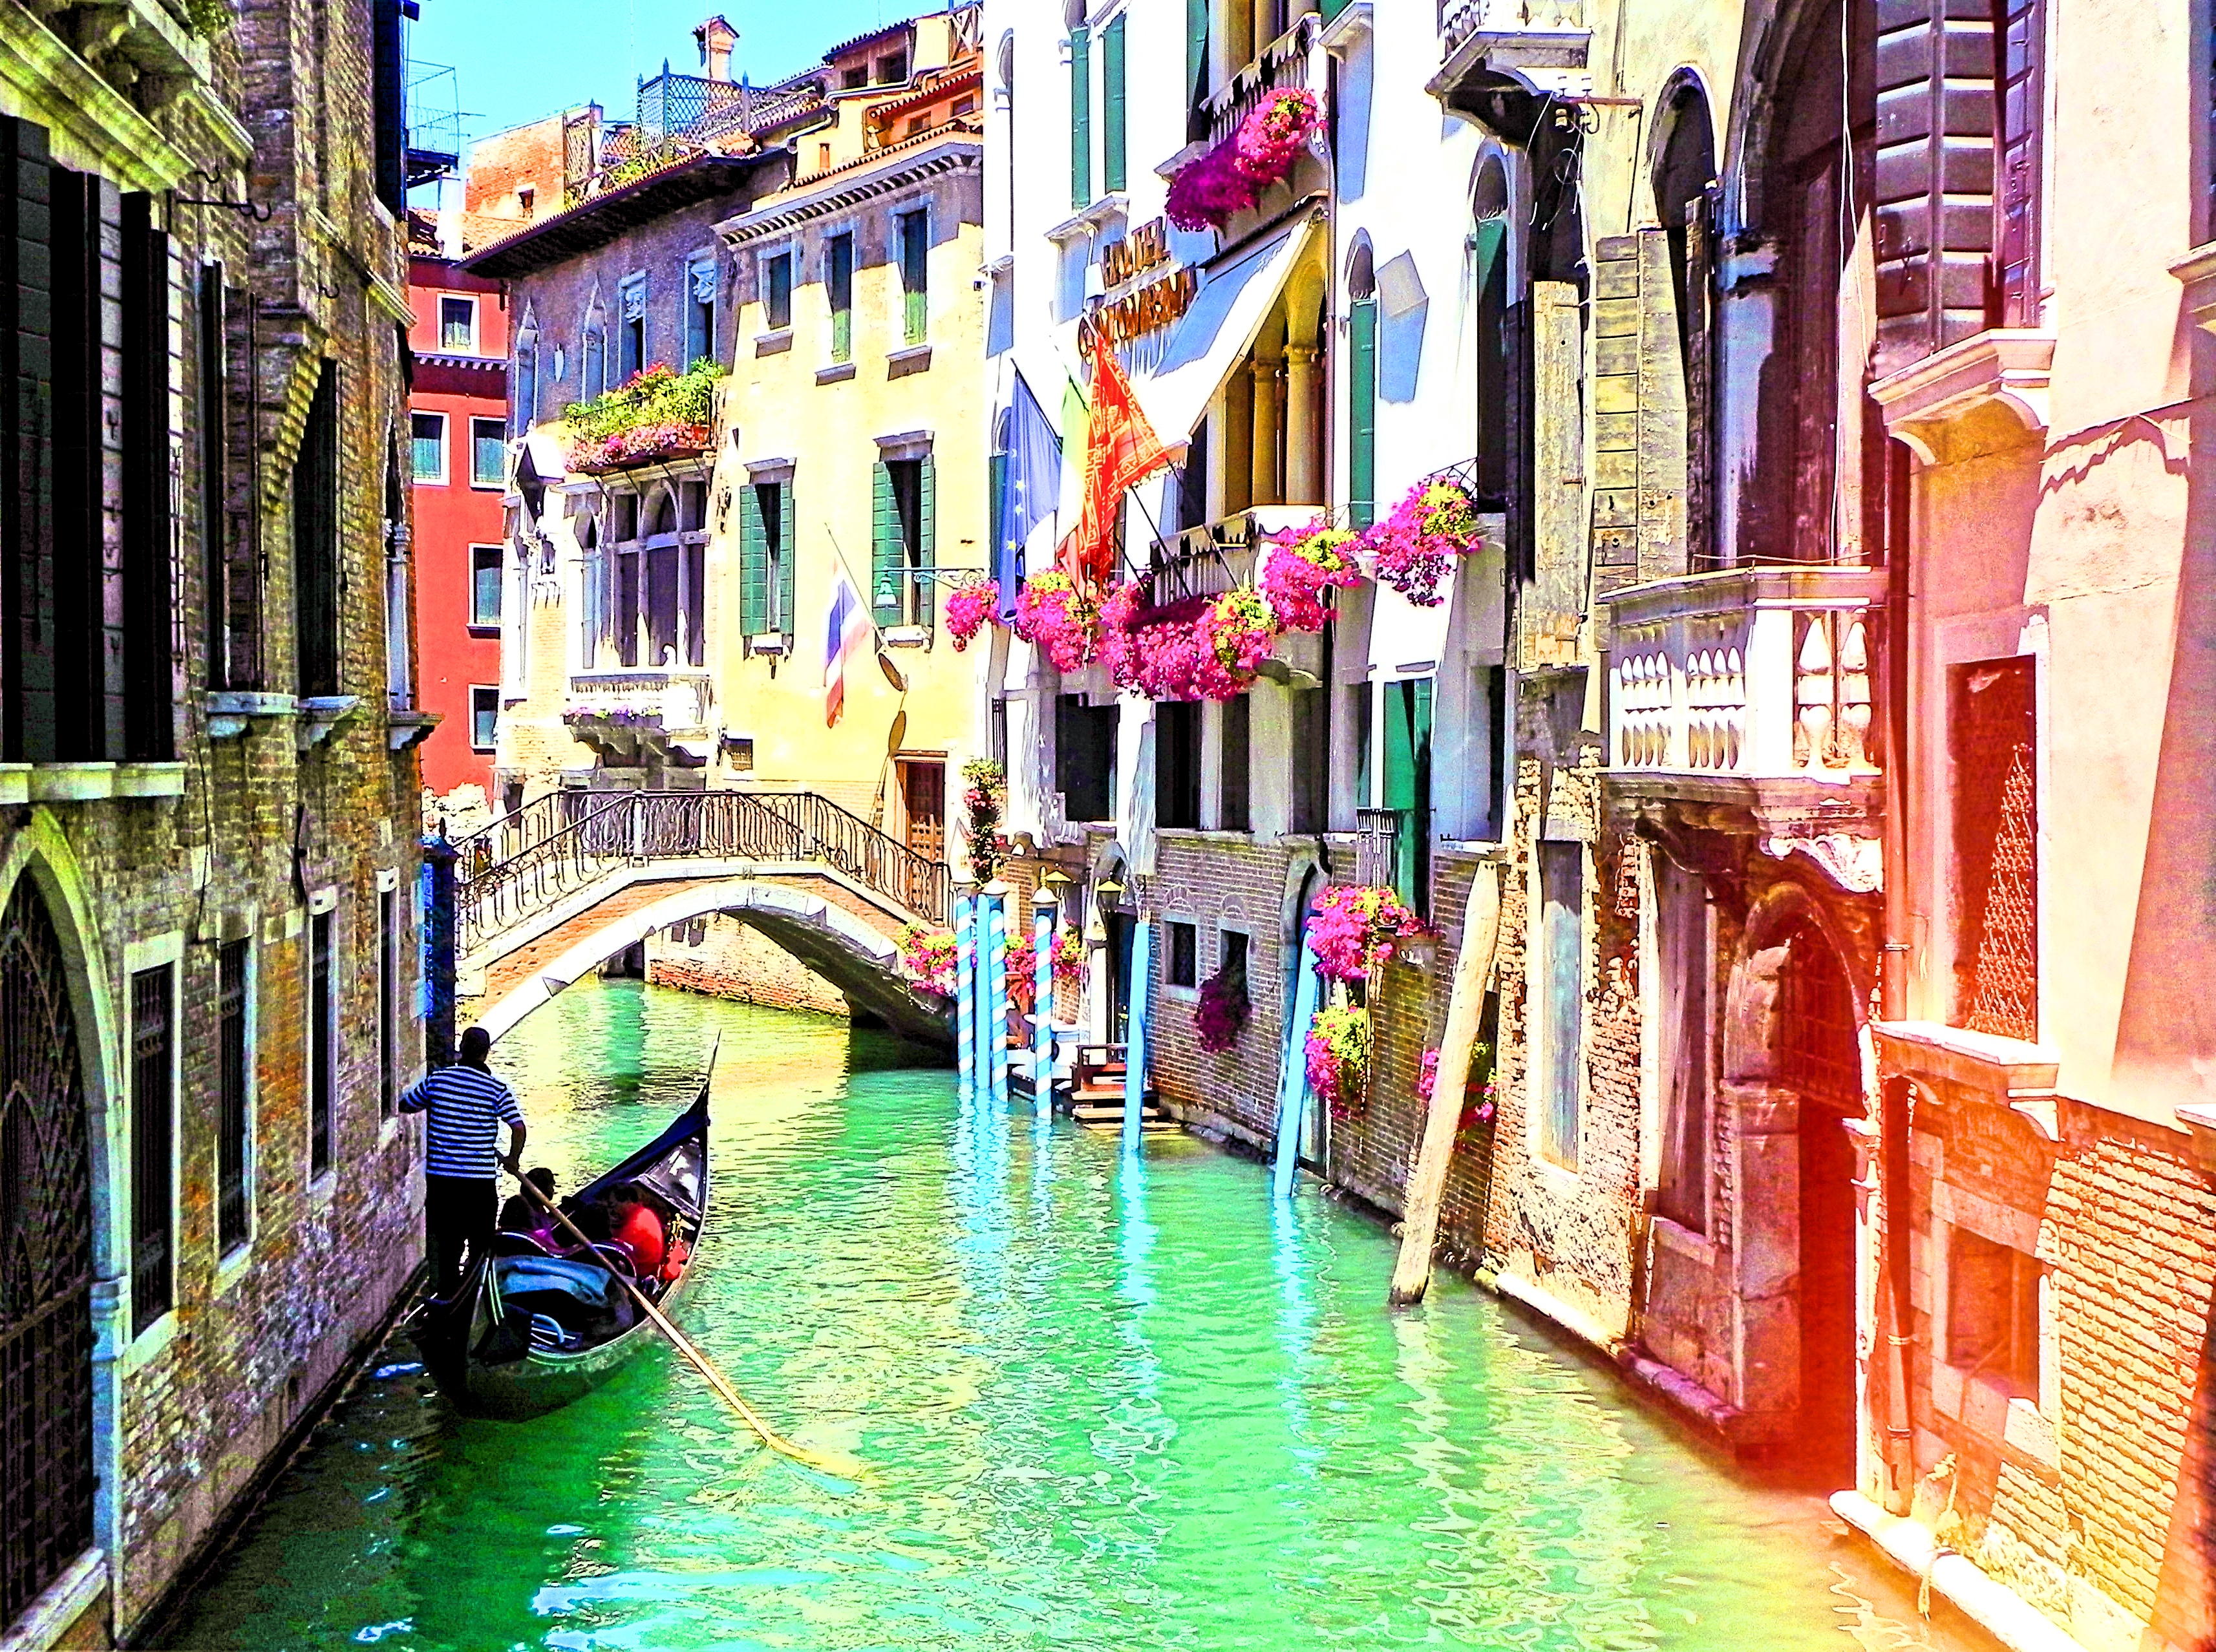 Venice25 - Venice- Sights, gondolas and carnival are all offered in Venice